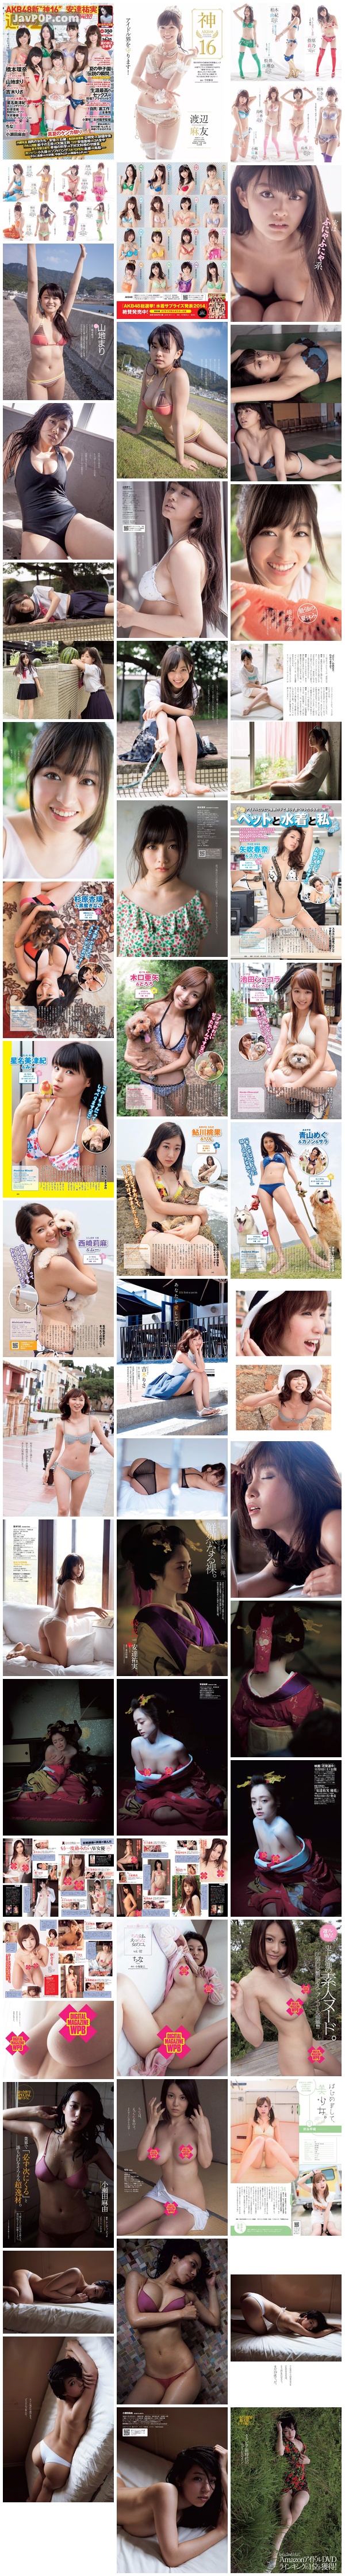 [Weekly_Playboy_Magazine] 2014 No.34-35 AKB48 山地まり 橋本環奈 吉木りさ 安達祐実 小瀬田麻由